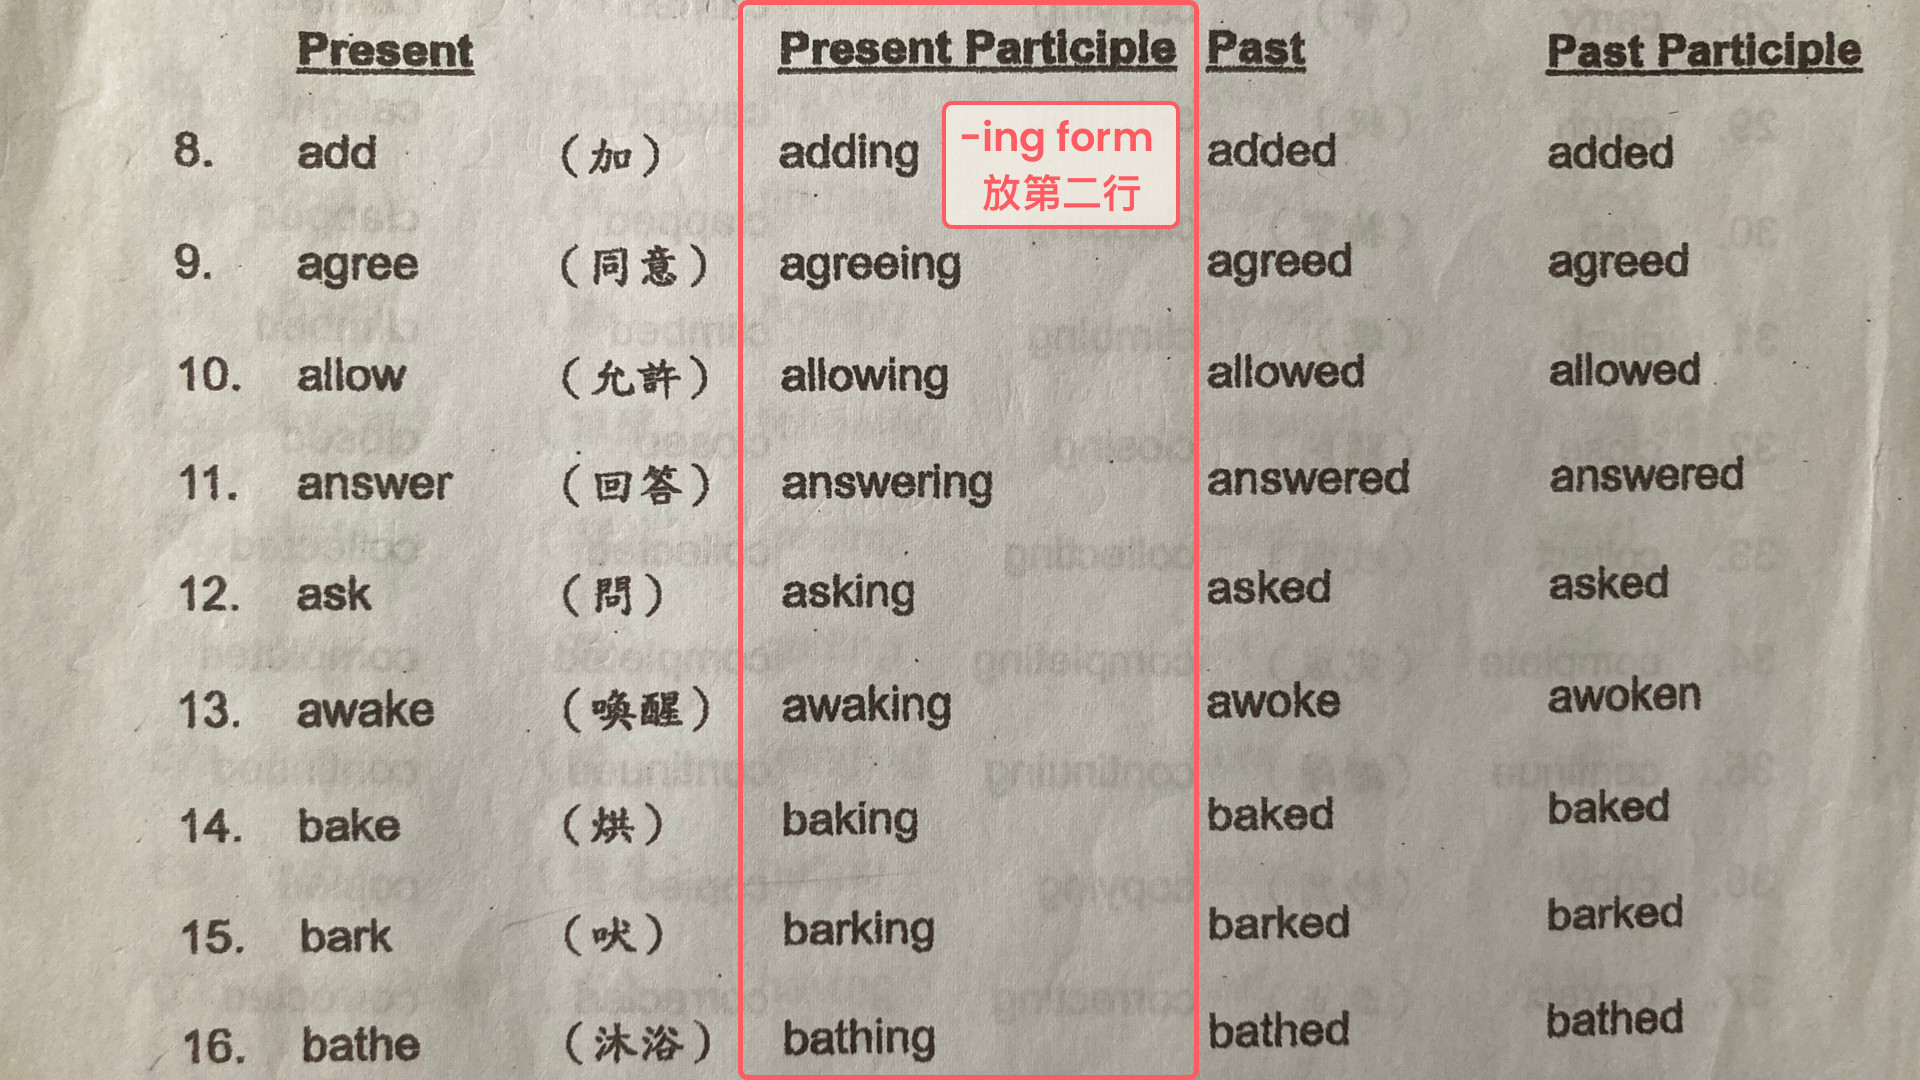 不規則動詞難記 Example 3 - Primary School Verb Table - Present Participle in the Second Column -ing form 放第二行